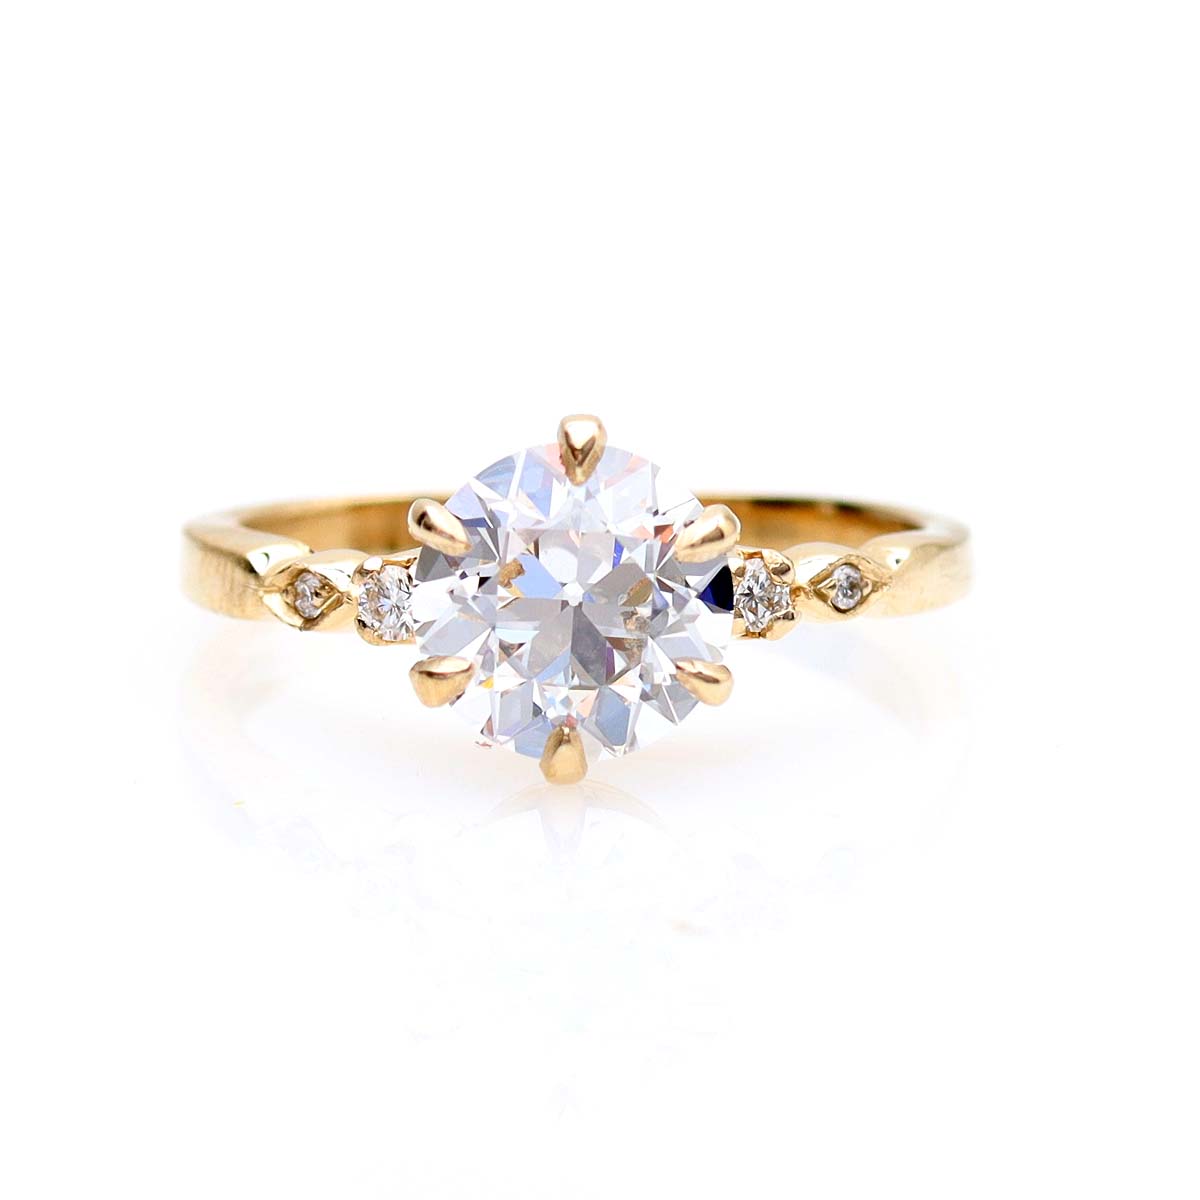 The Cordelia Replica Edwardian Engagement Ring #3510-8